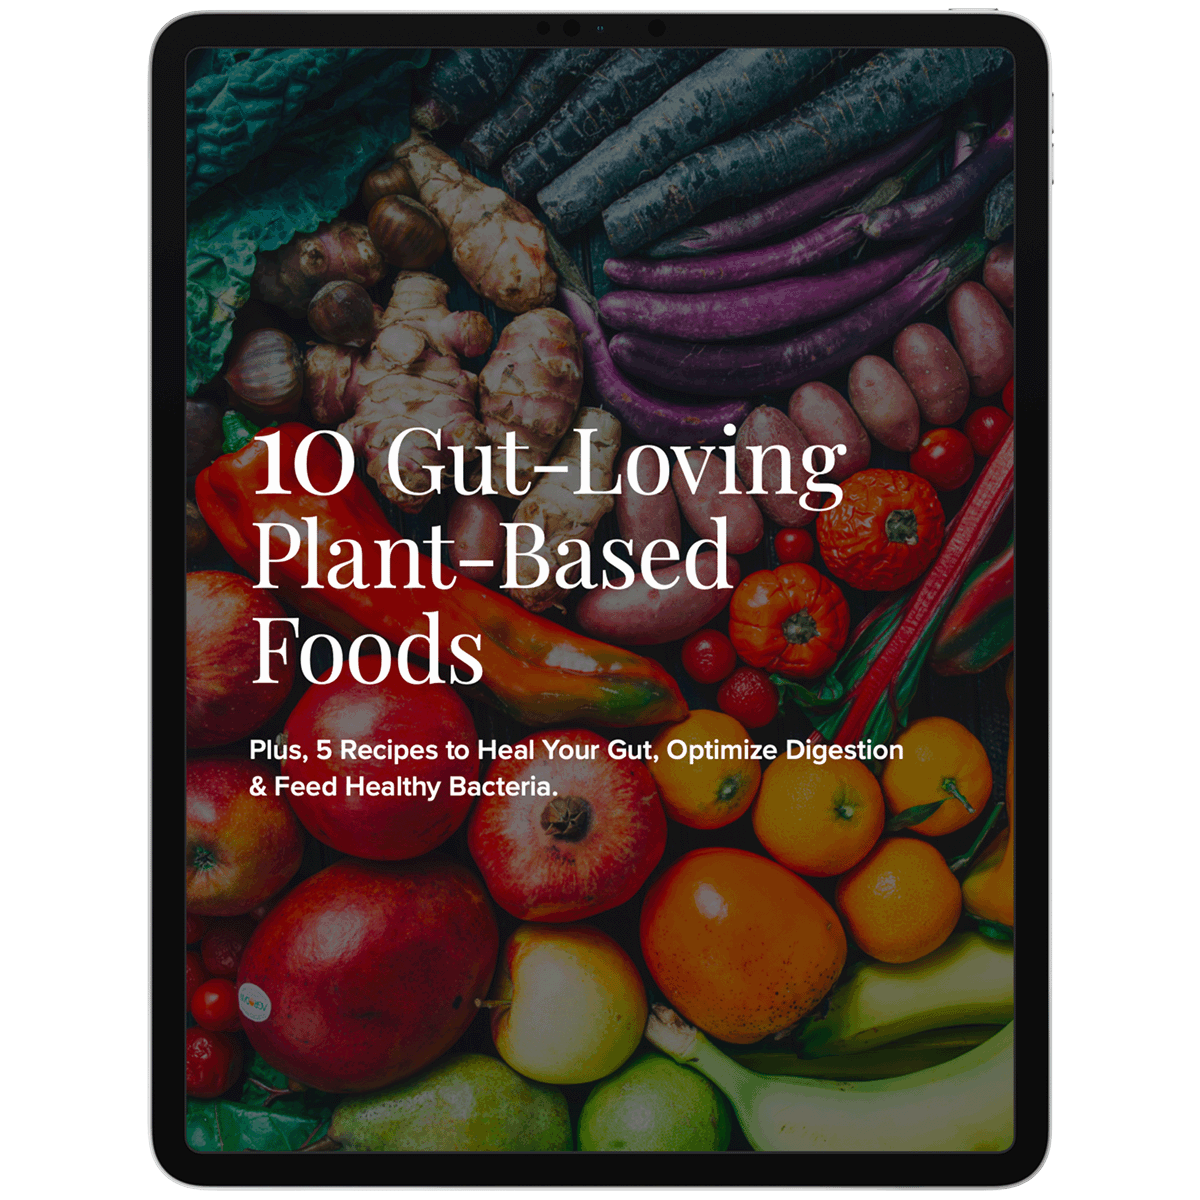 10 Gut-Loving Plant-Based Foods